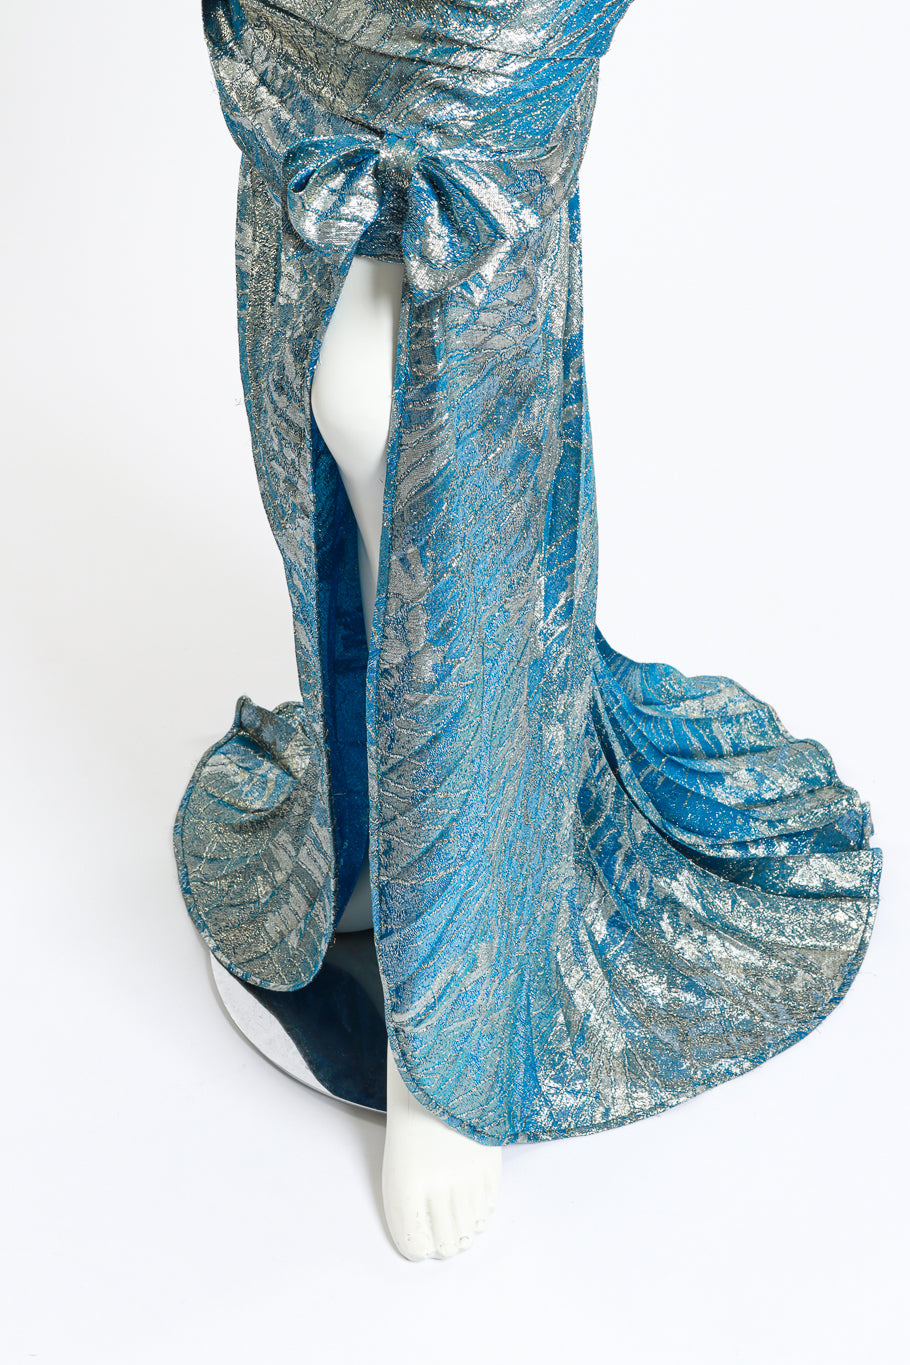 Ungaro Metallic Mermaid Gown skirt detail mannequin @RECESS LA